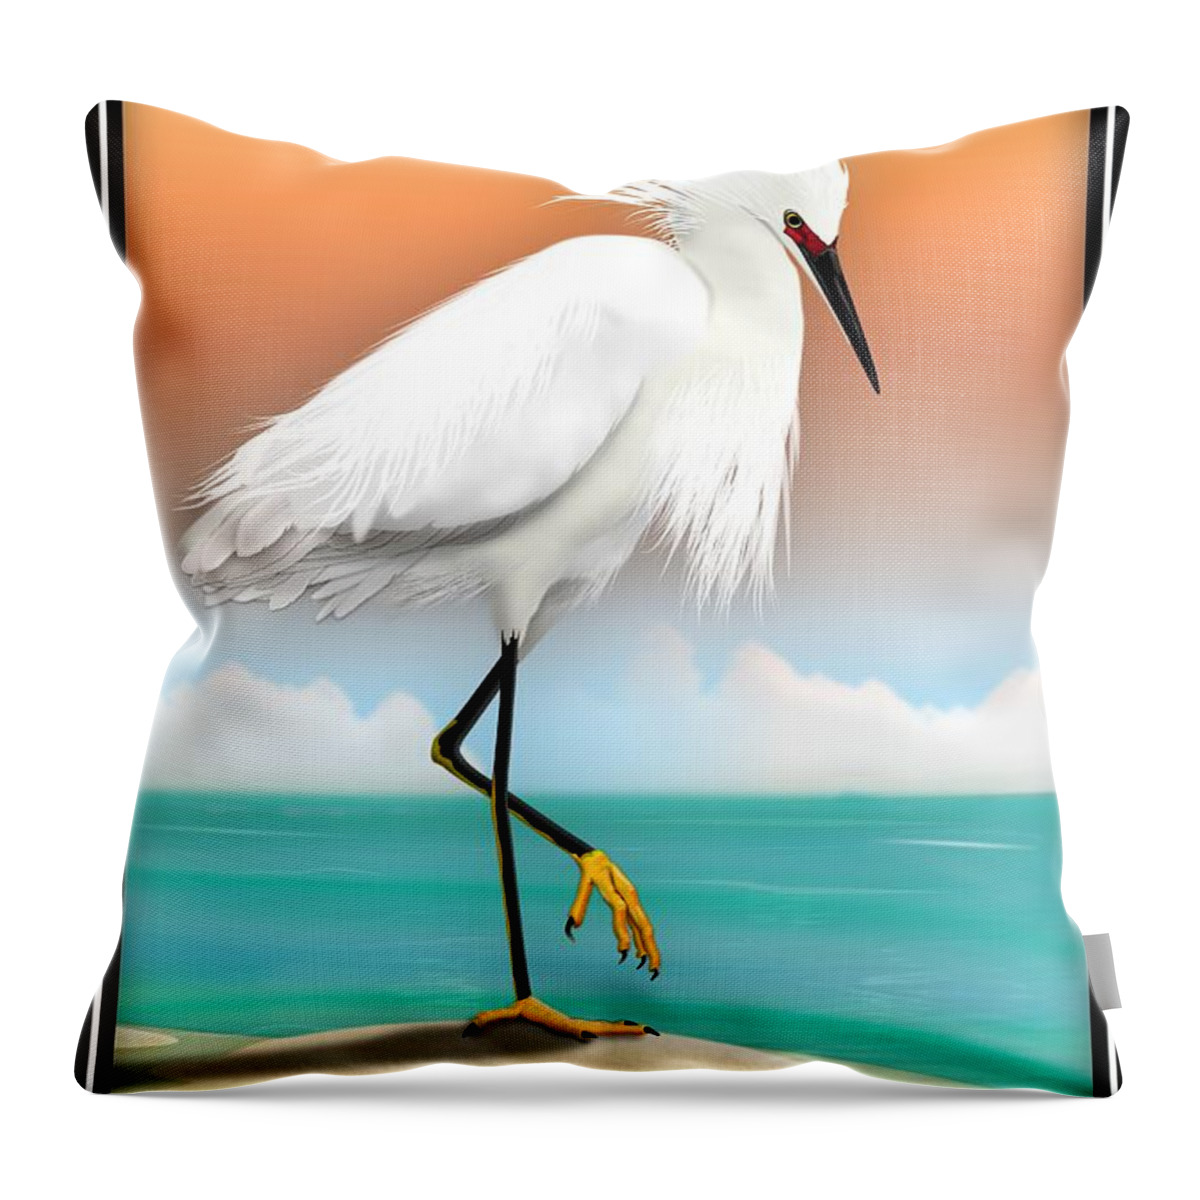 White Egret Throw Pillow featuring the digital art Snowy Egret White Heron On Beach by John Wills